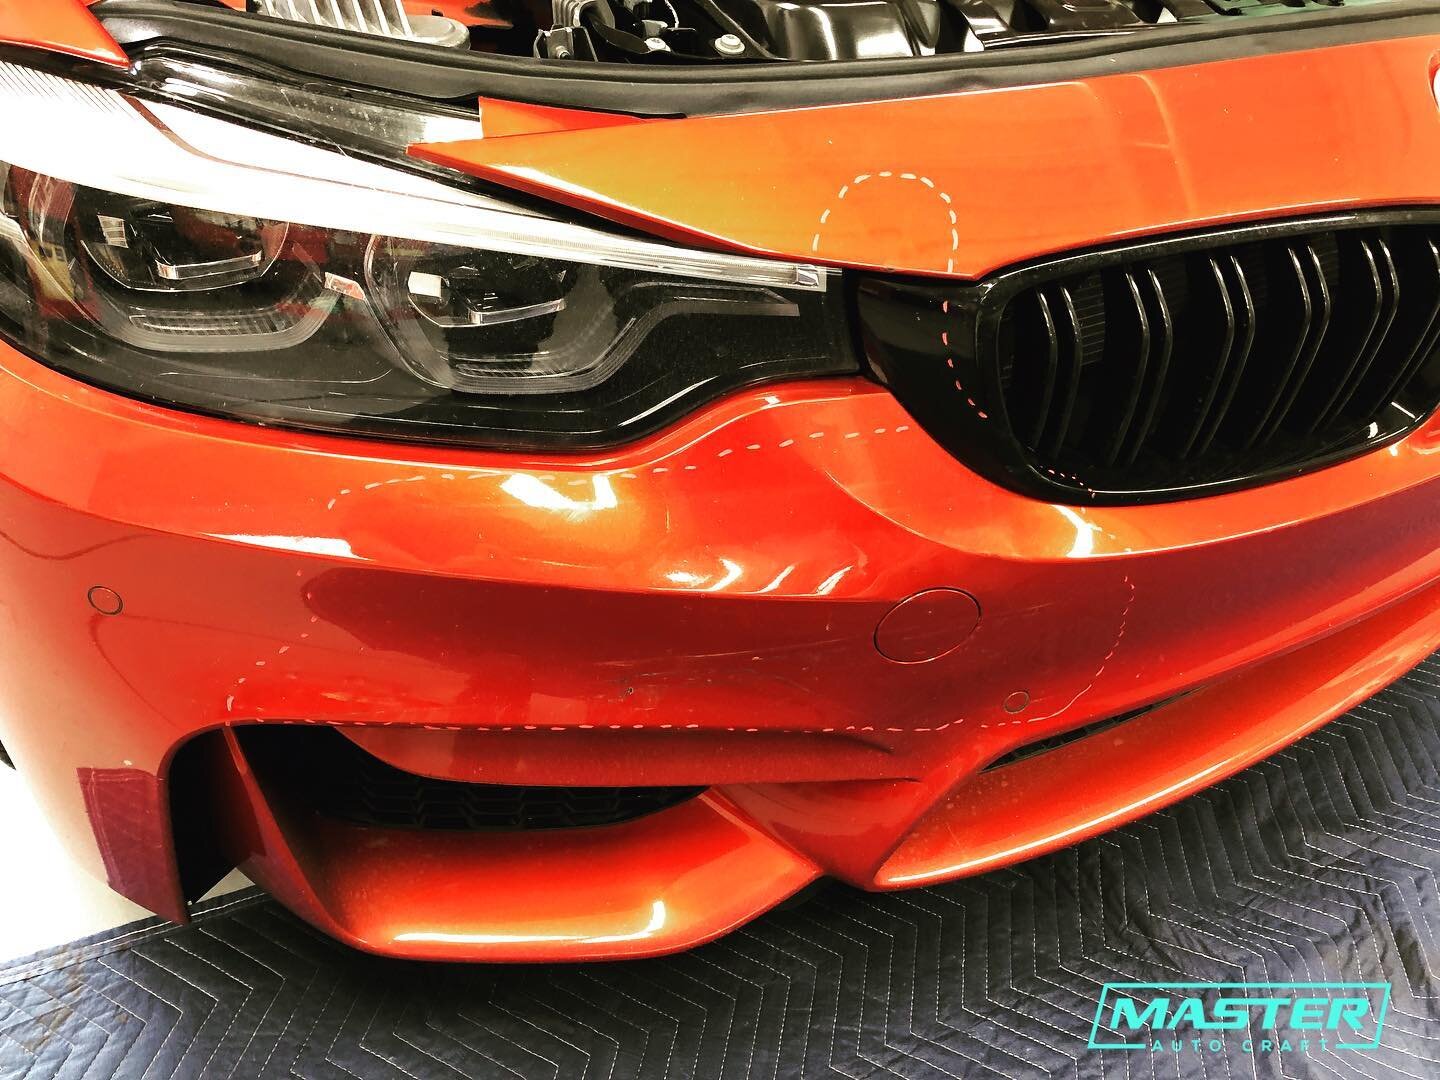 BMW M4. First pic preliminary estimate blueprint. Second pic authorized teardown. Hidden damages found. 

#masterautocraft #burlingame #bmw #m4 #collisionrepair #insurance